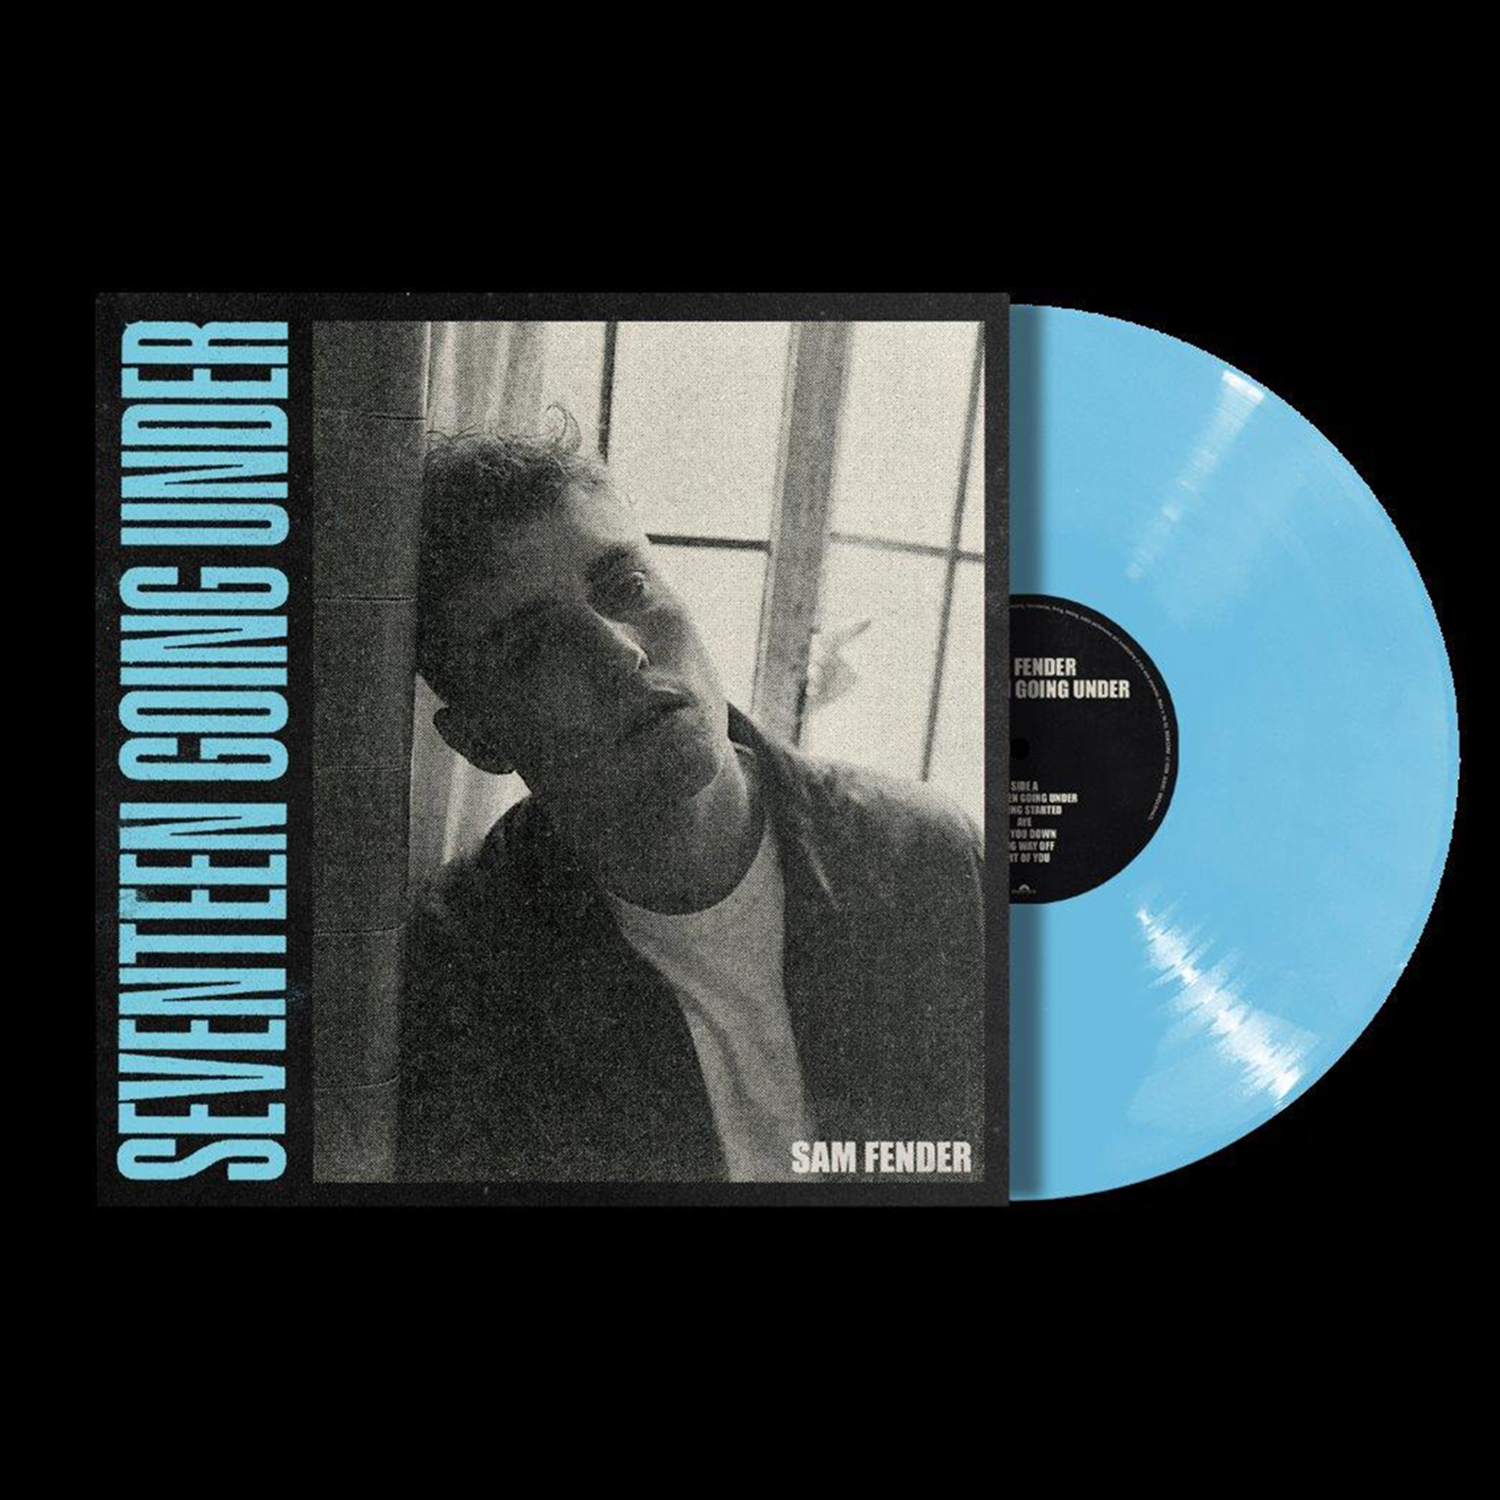 Sam Fender - Seventeen Going Under (Blue Vinyl)